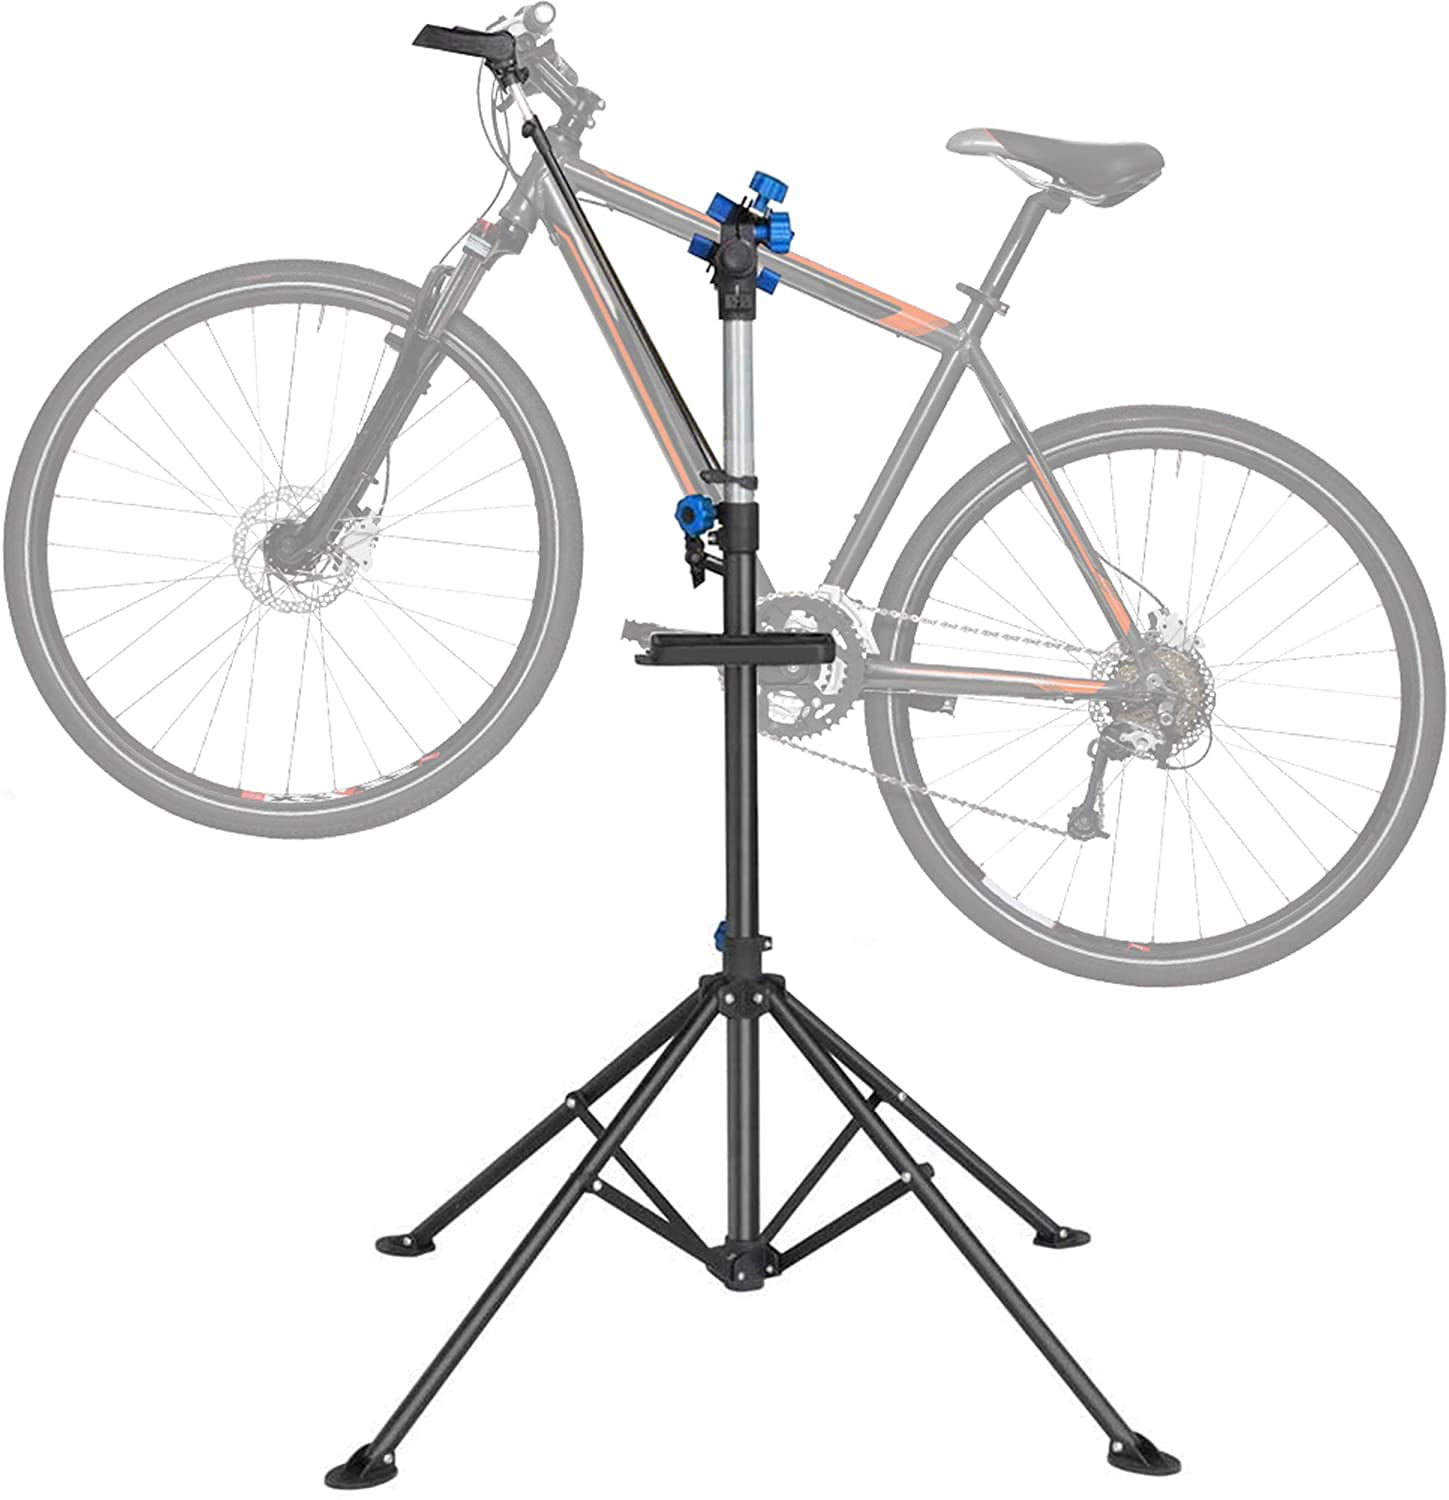 Adjustable Bicycle Bike Maintenance Repair Stand Mechanic Workstand Rack Set 